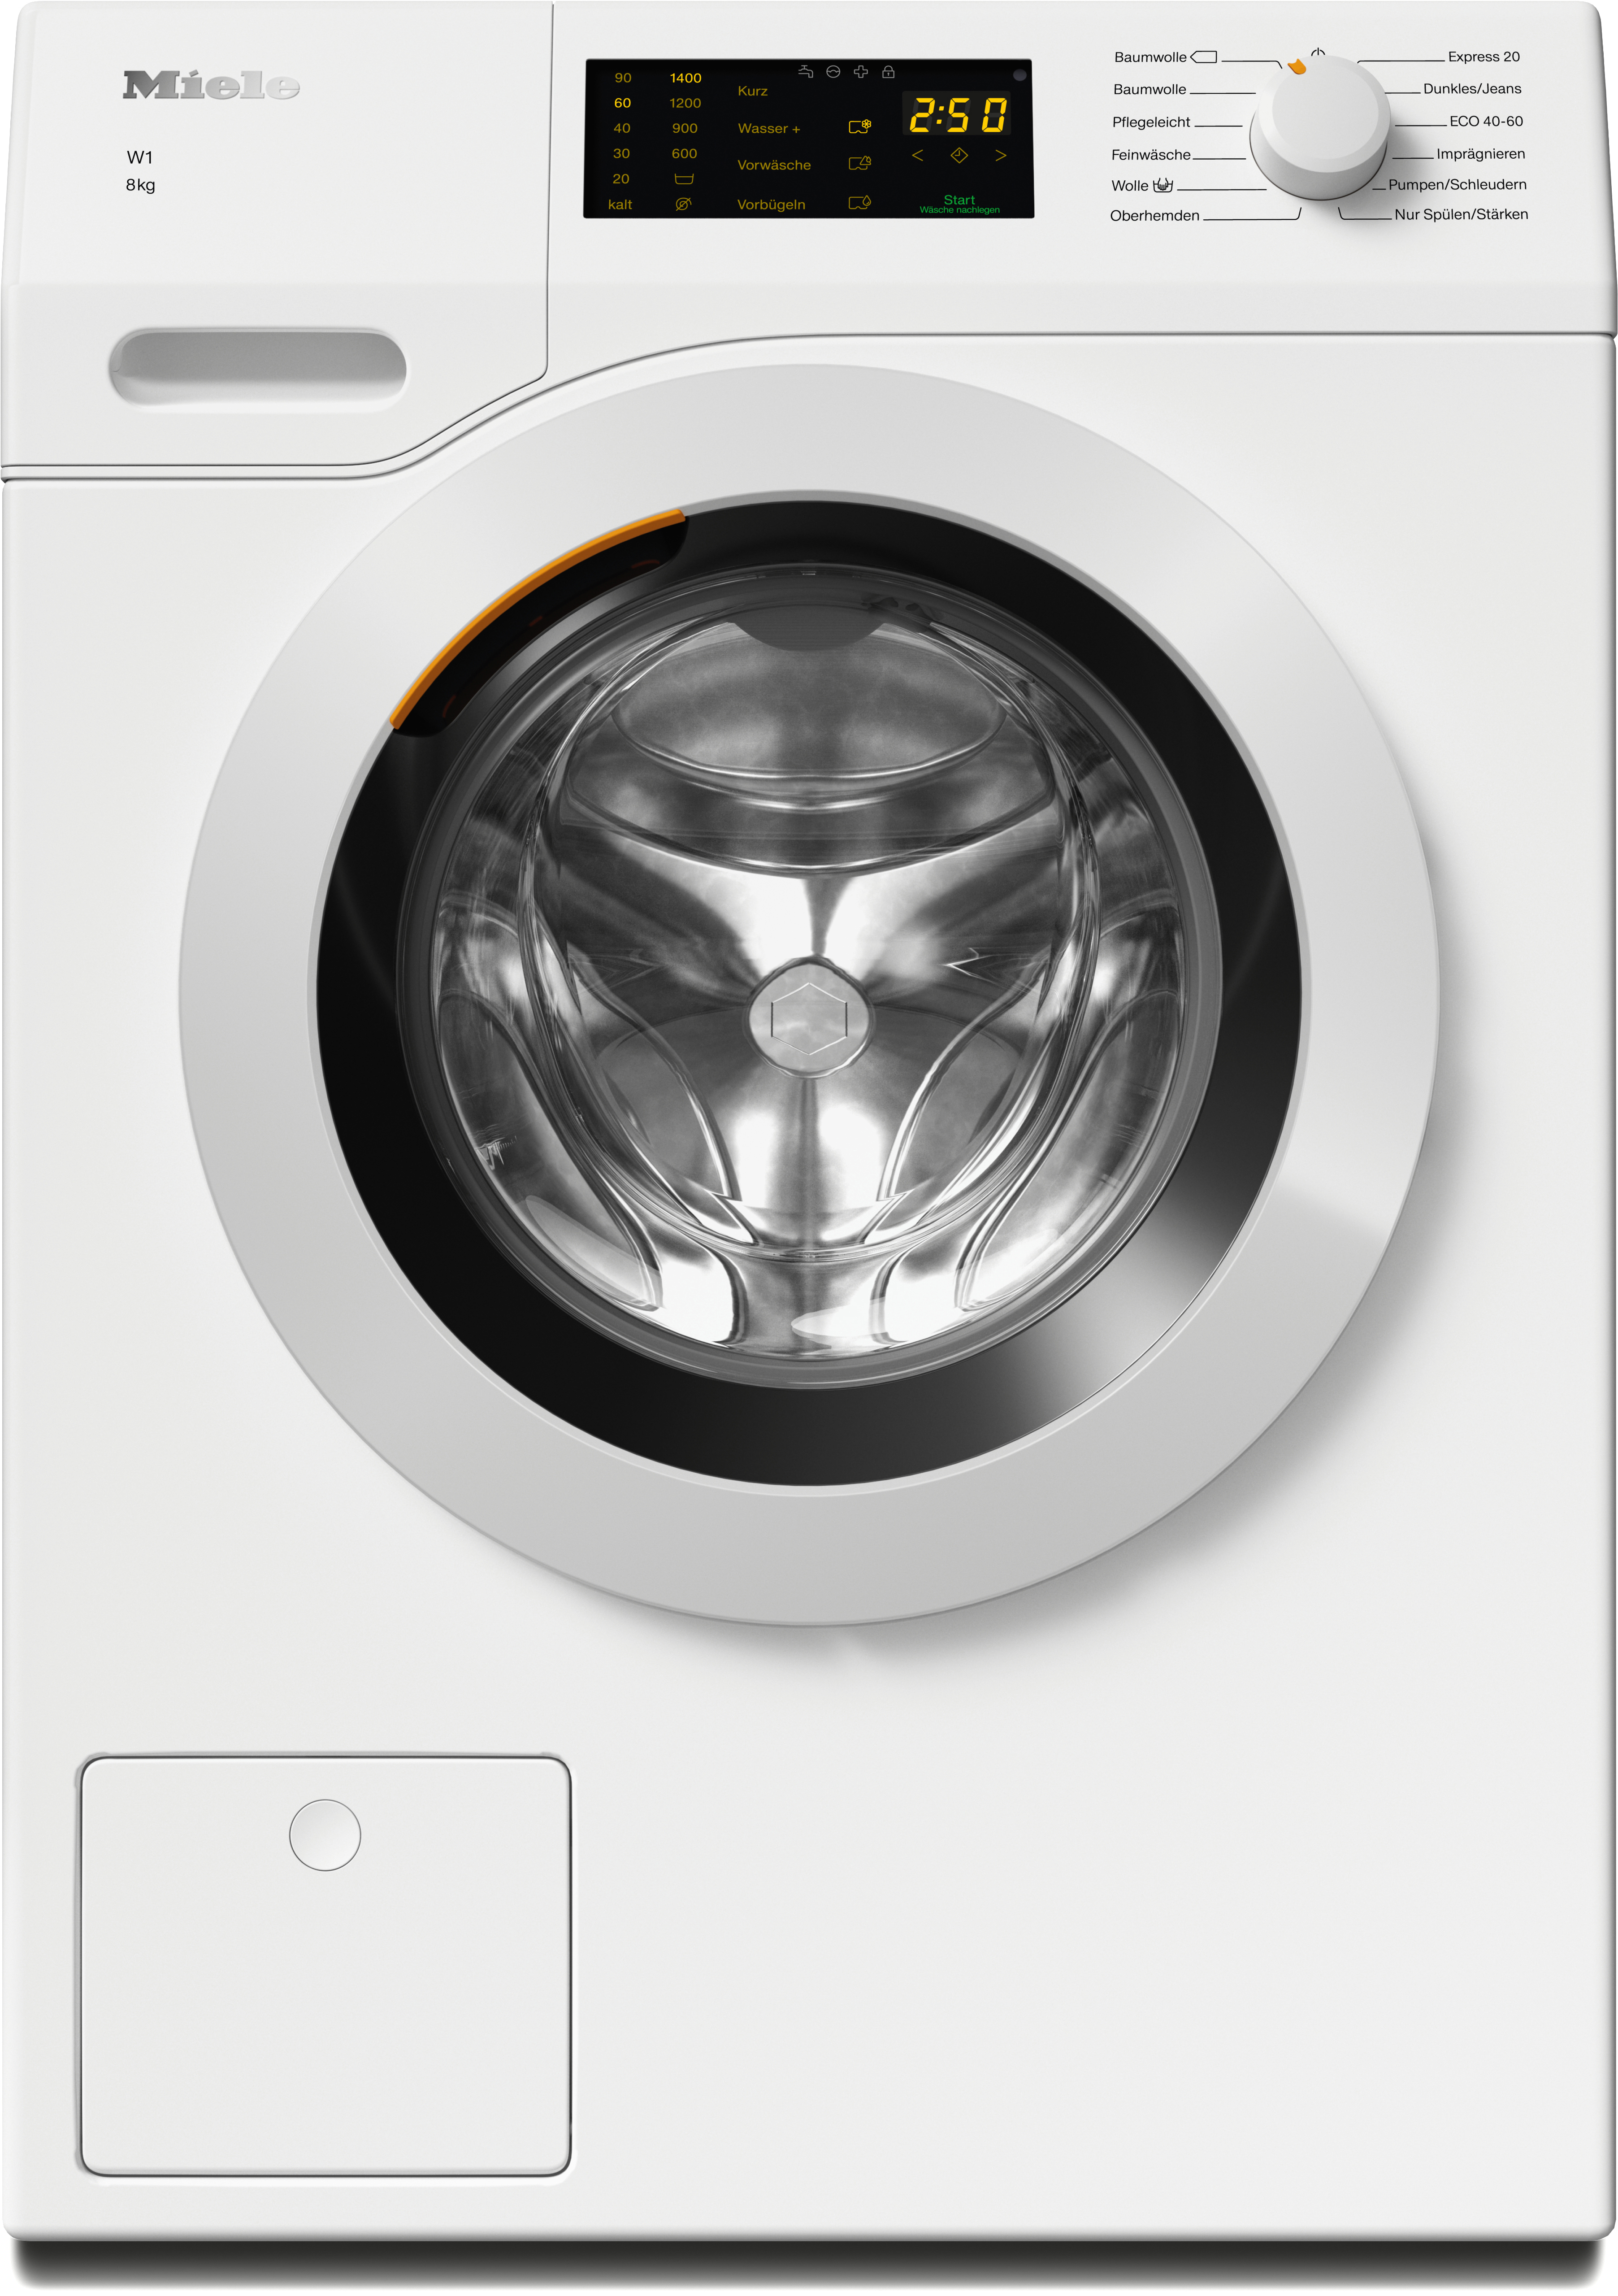 Flusenfilter, kg, 1400 MIELE (8 A, Edition Fremdkörperfilter) Chrome Waschmaschine WCS WCD130 W1 U/Min.,